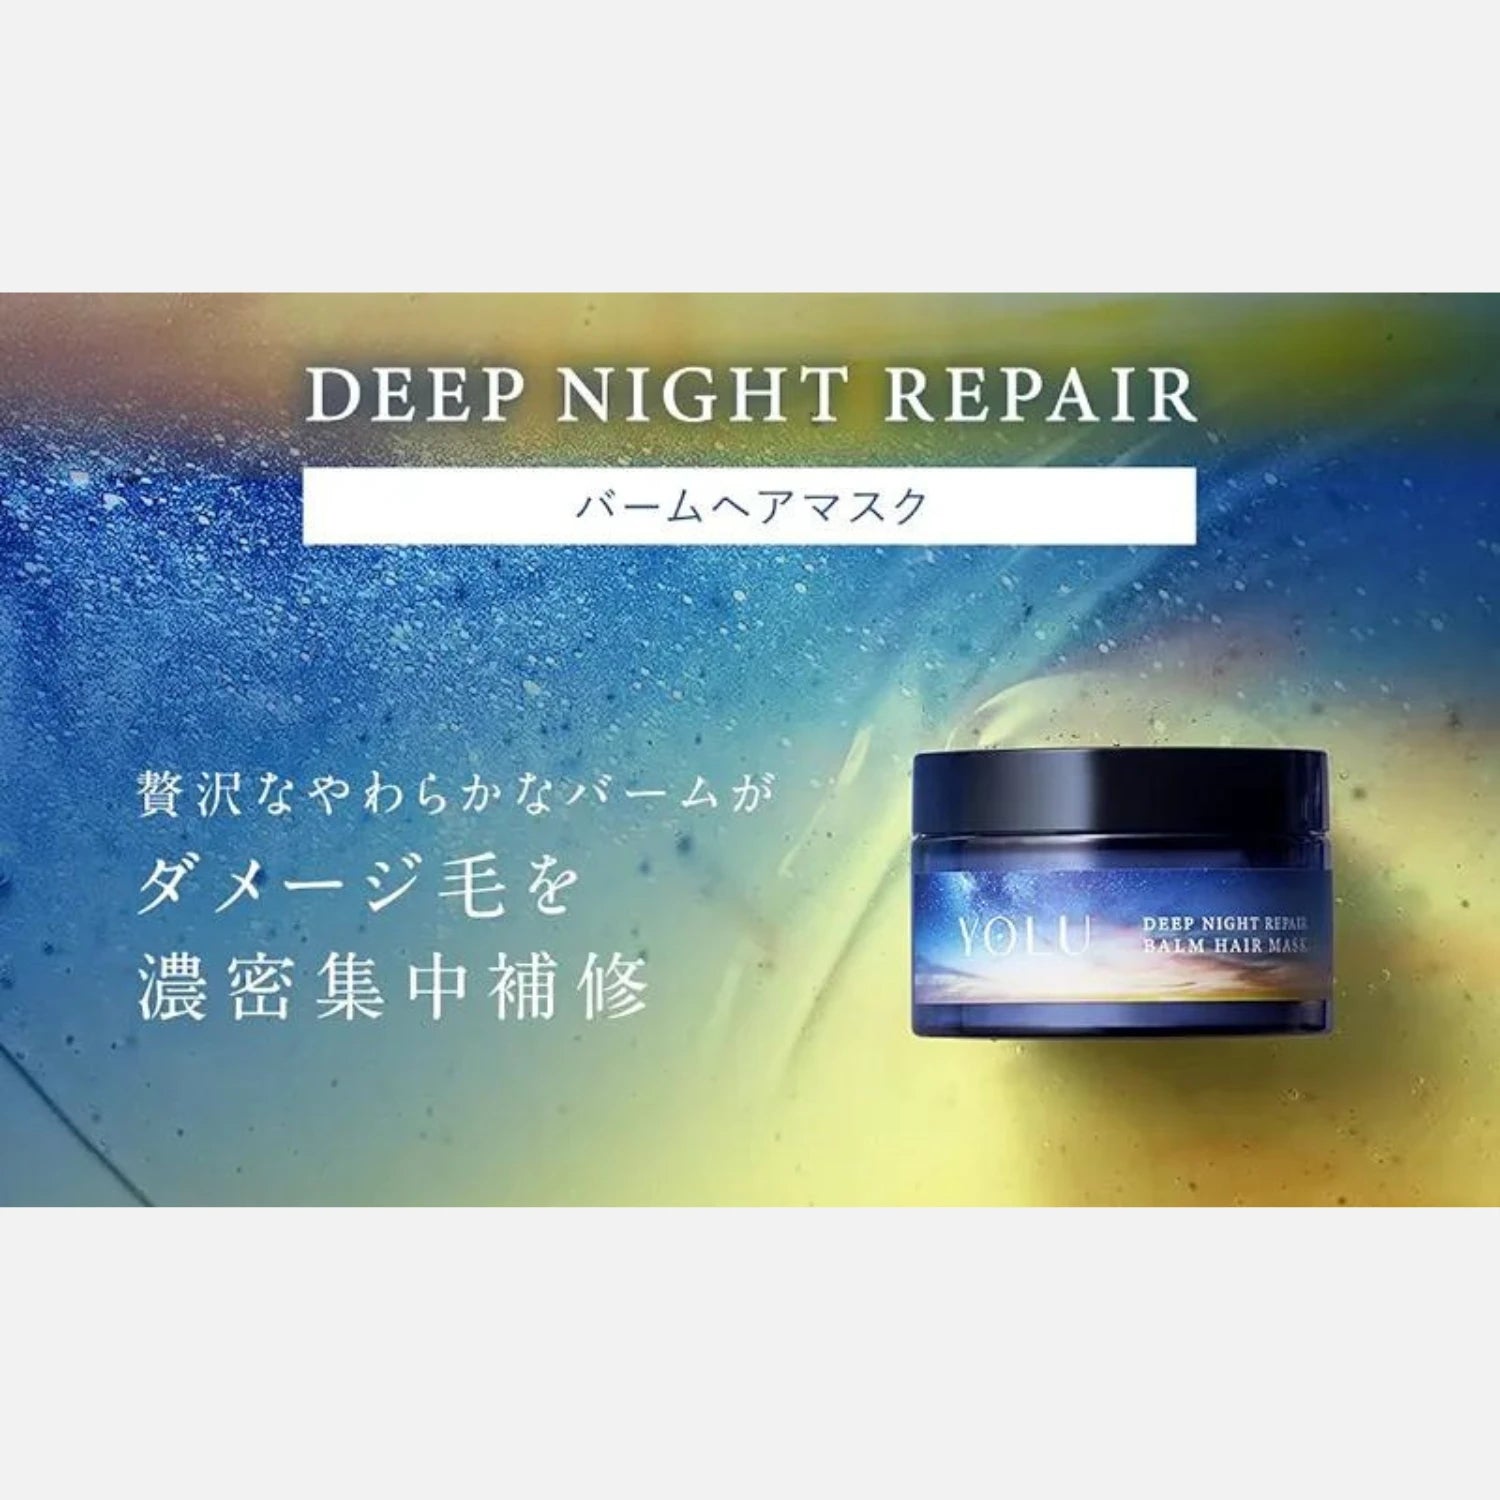 YOLU Deep Night Repair Shampoo, Treatment & Hair Mask Set (475ml Each + 145g) - Buy Me Japan